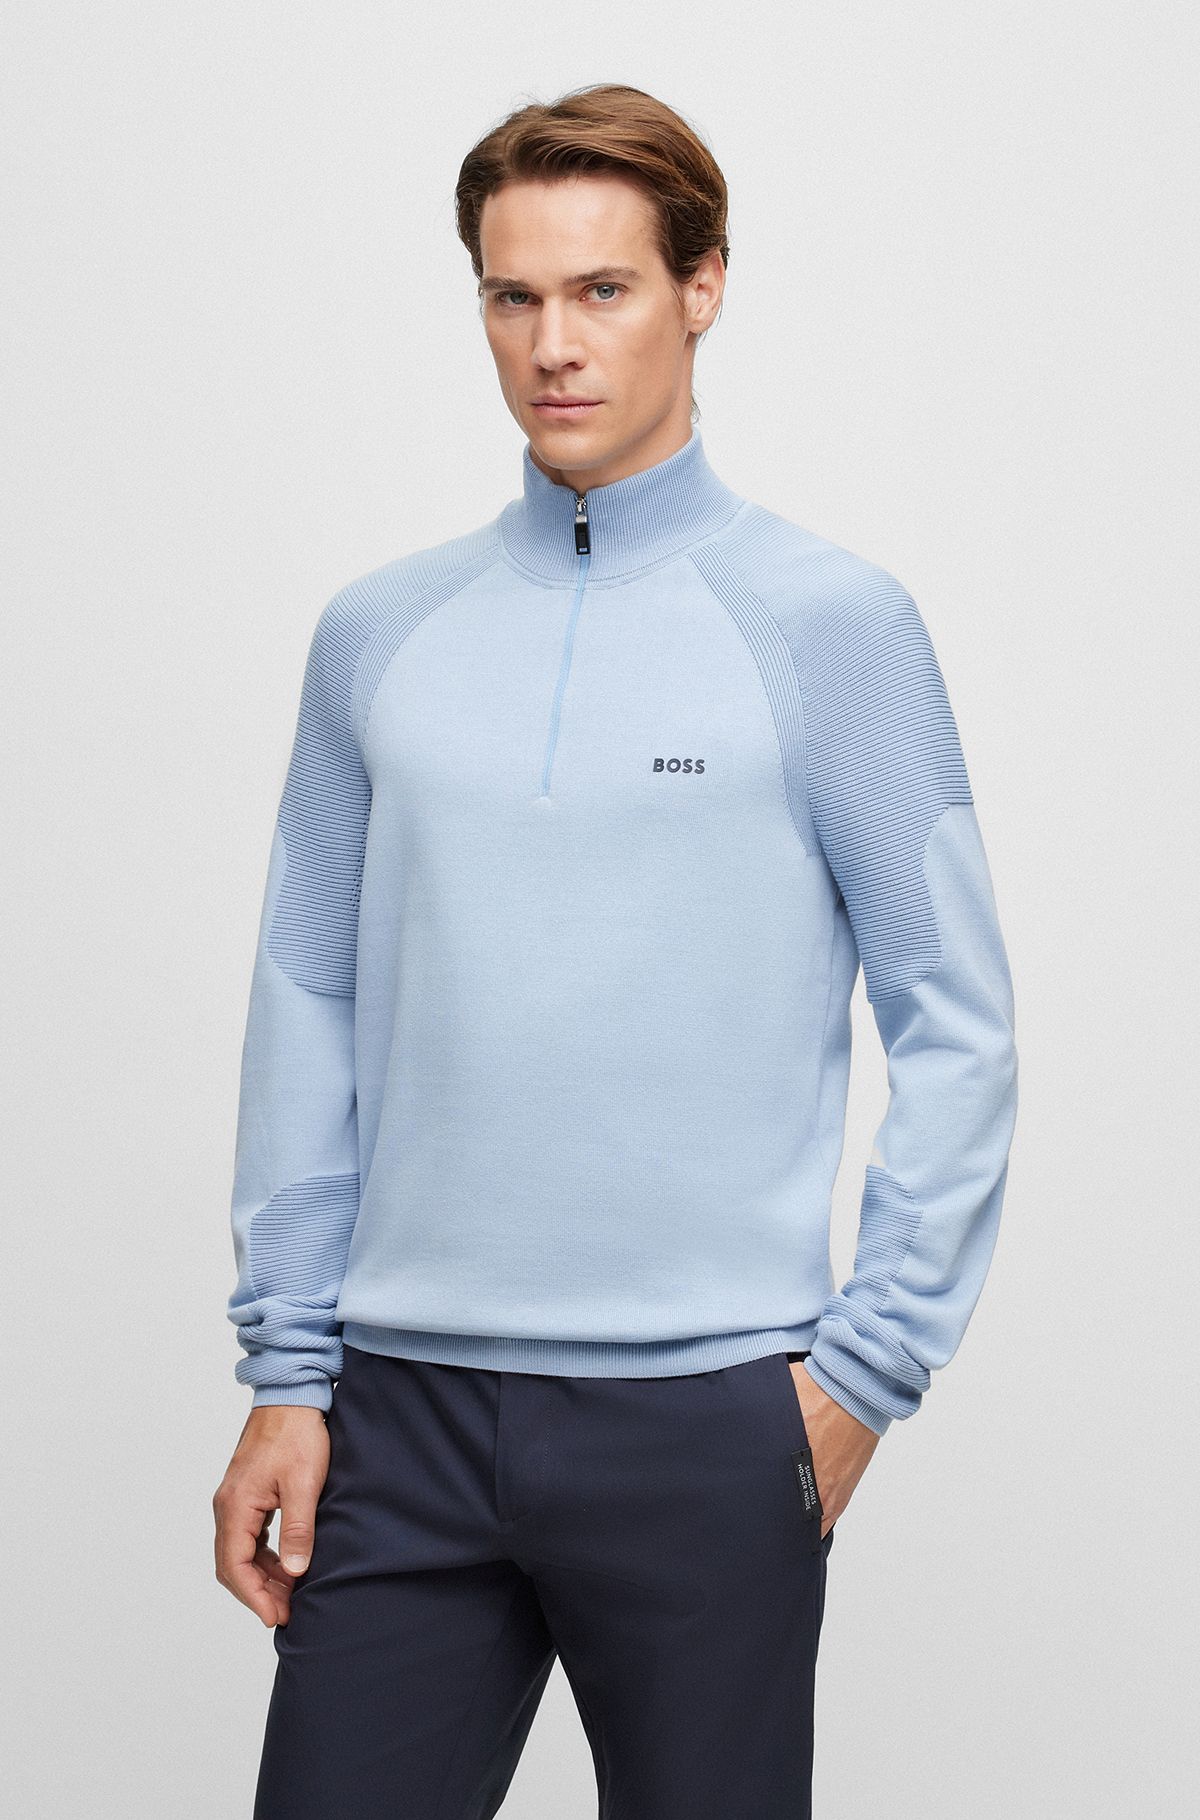 Cotton-blend zip-neck sweater with logo detail, Light Blue